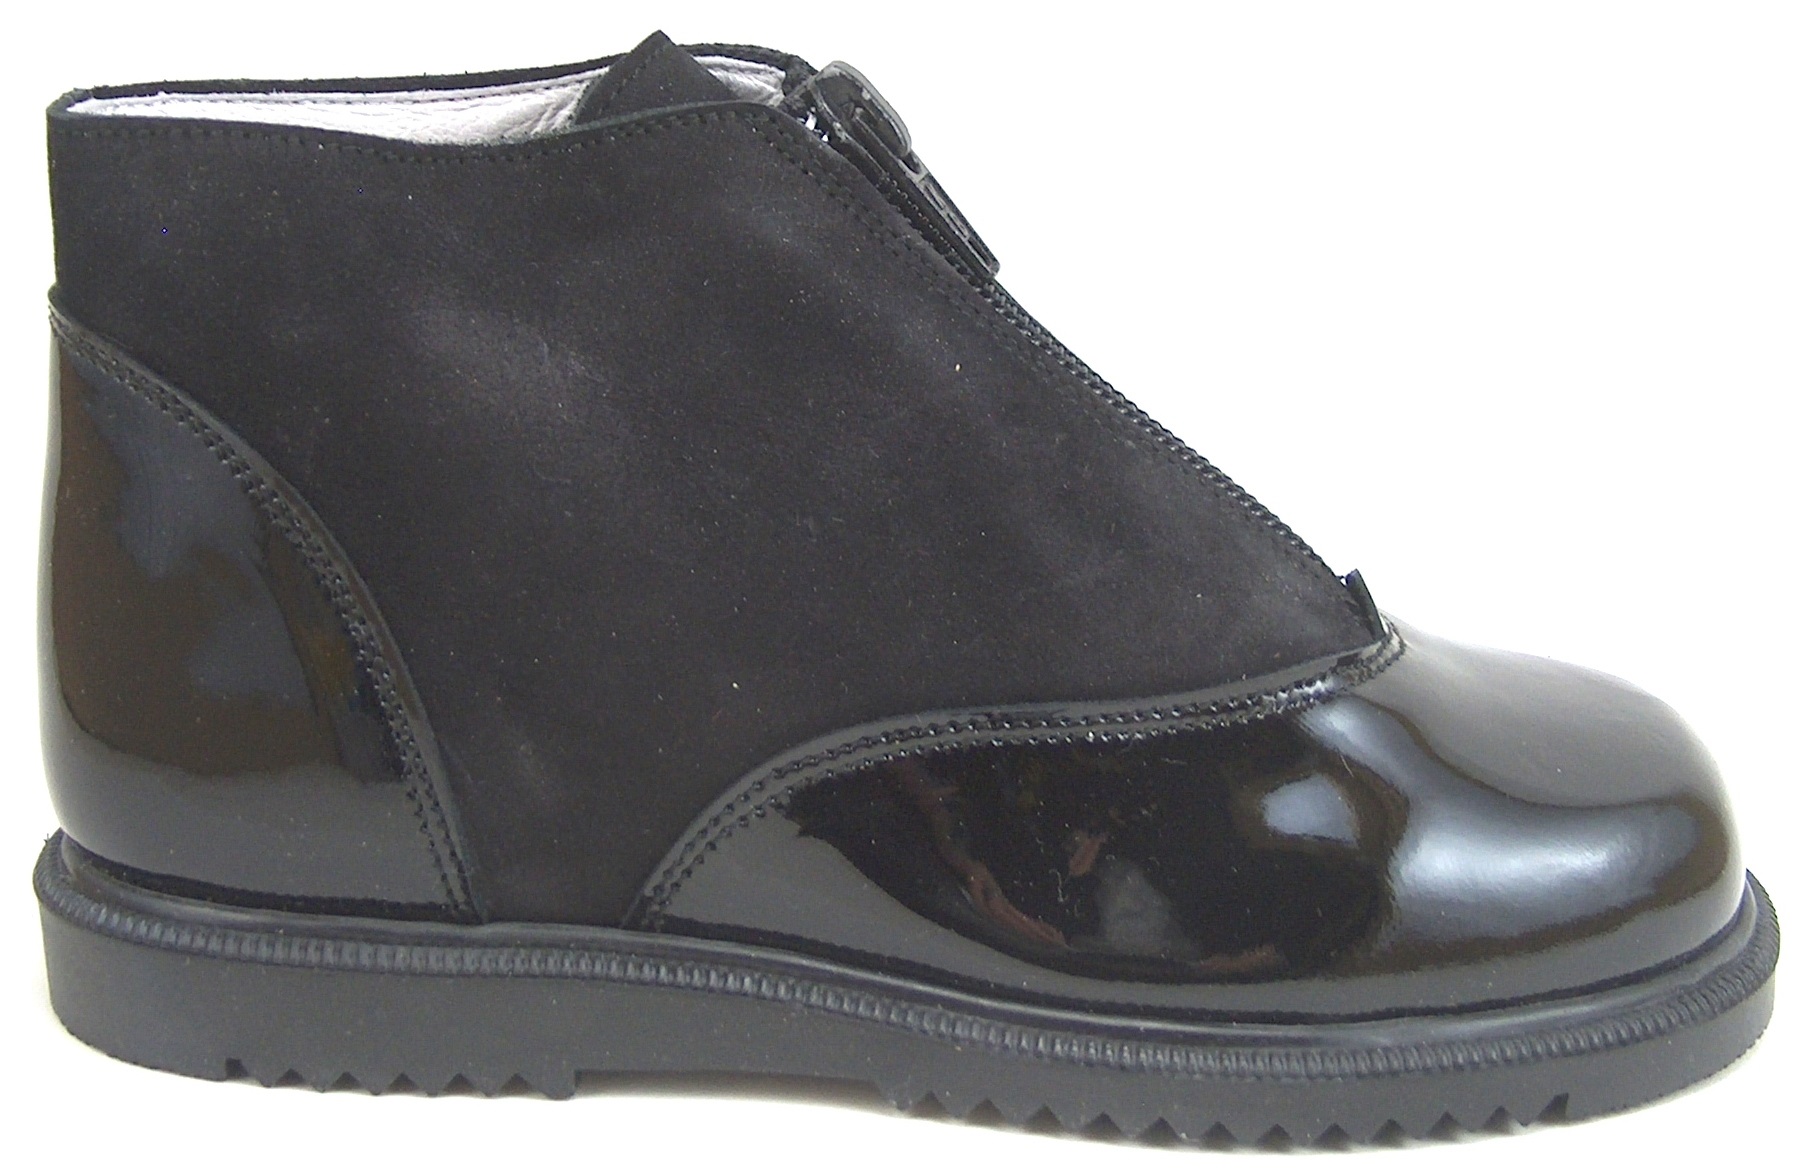 S-6733 - Black Patent Boots - Euro 26 Size 10